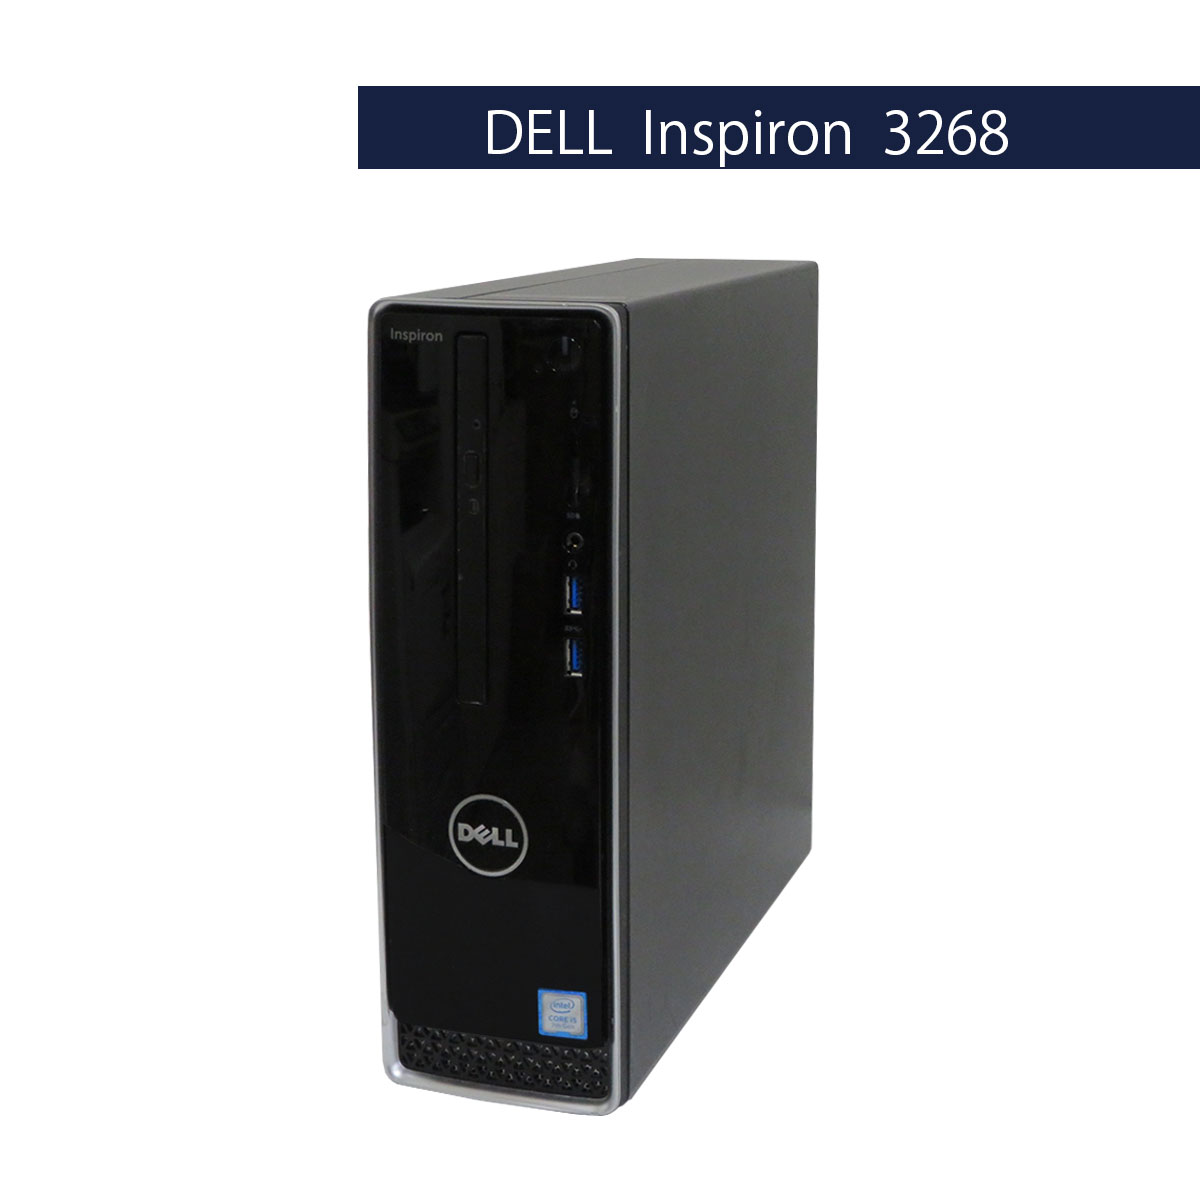 DELL Inspiron 3268 - デスクトップ型PC